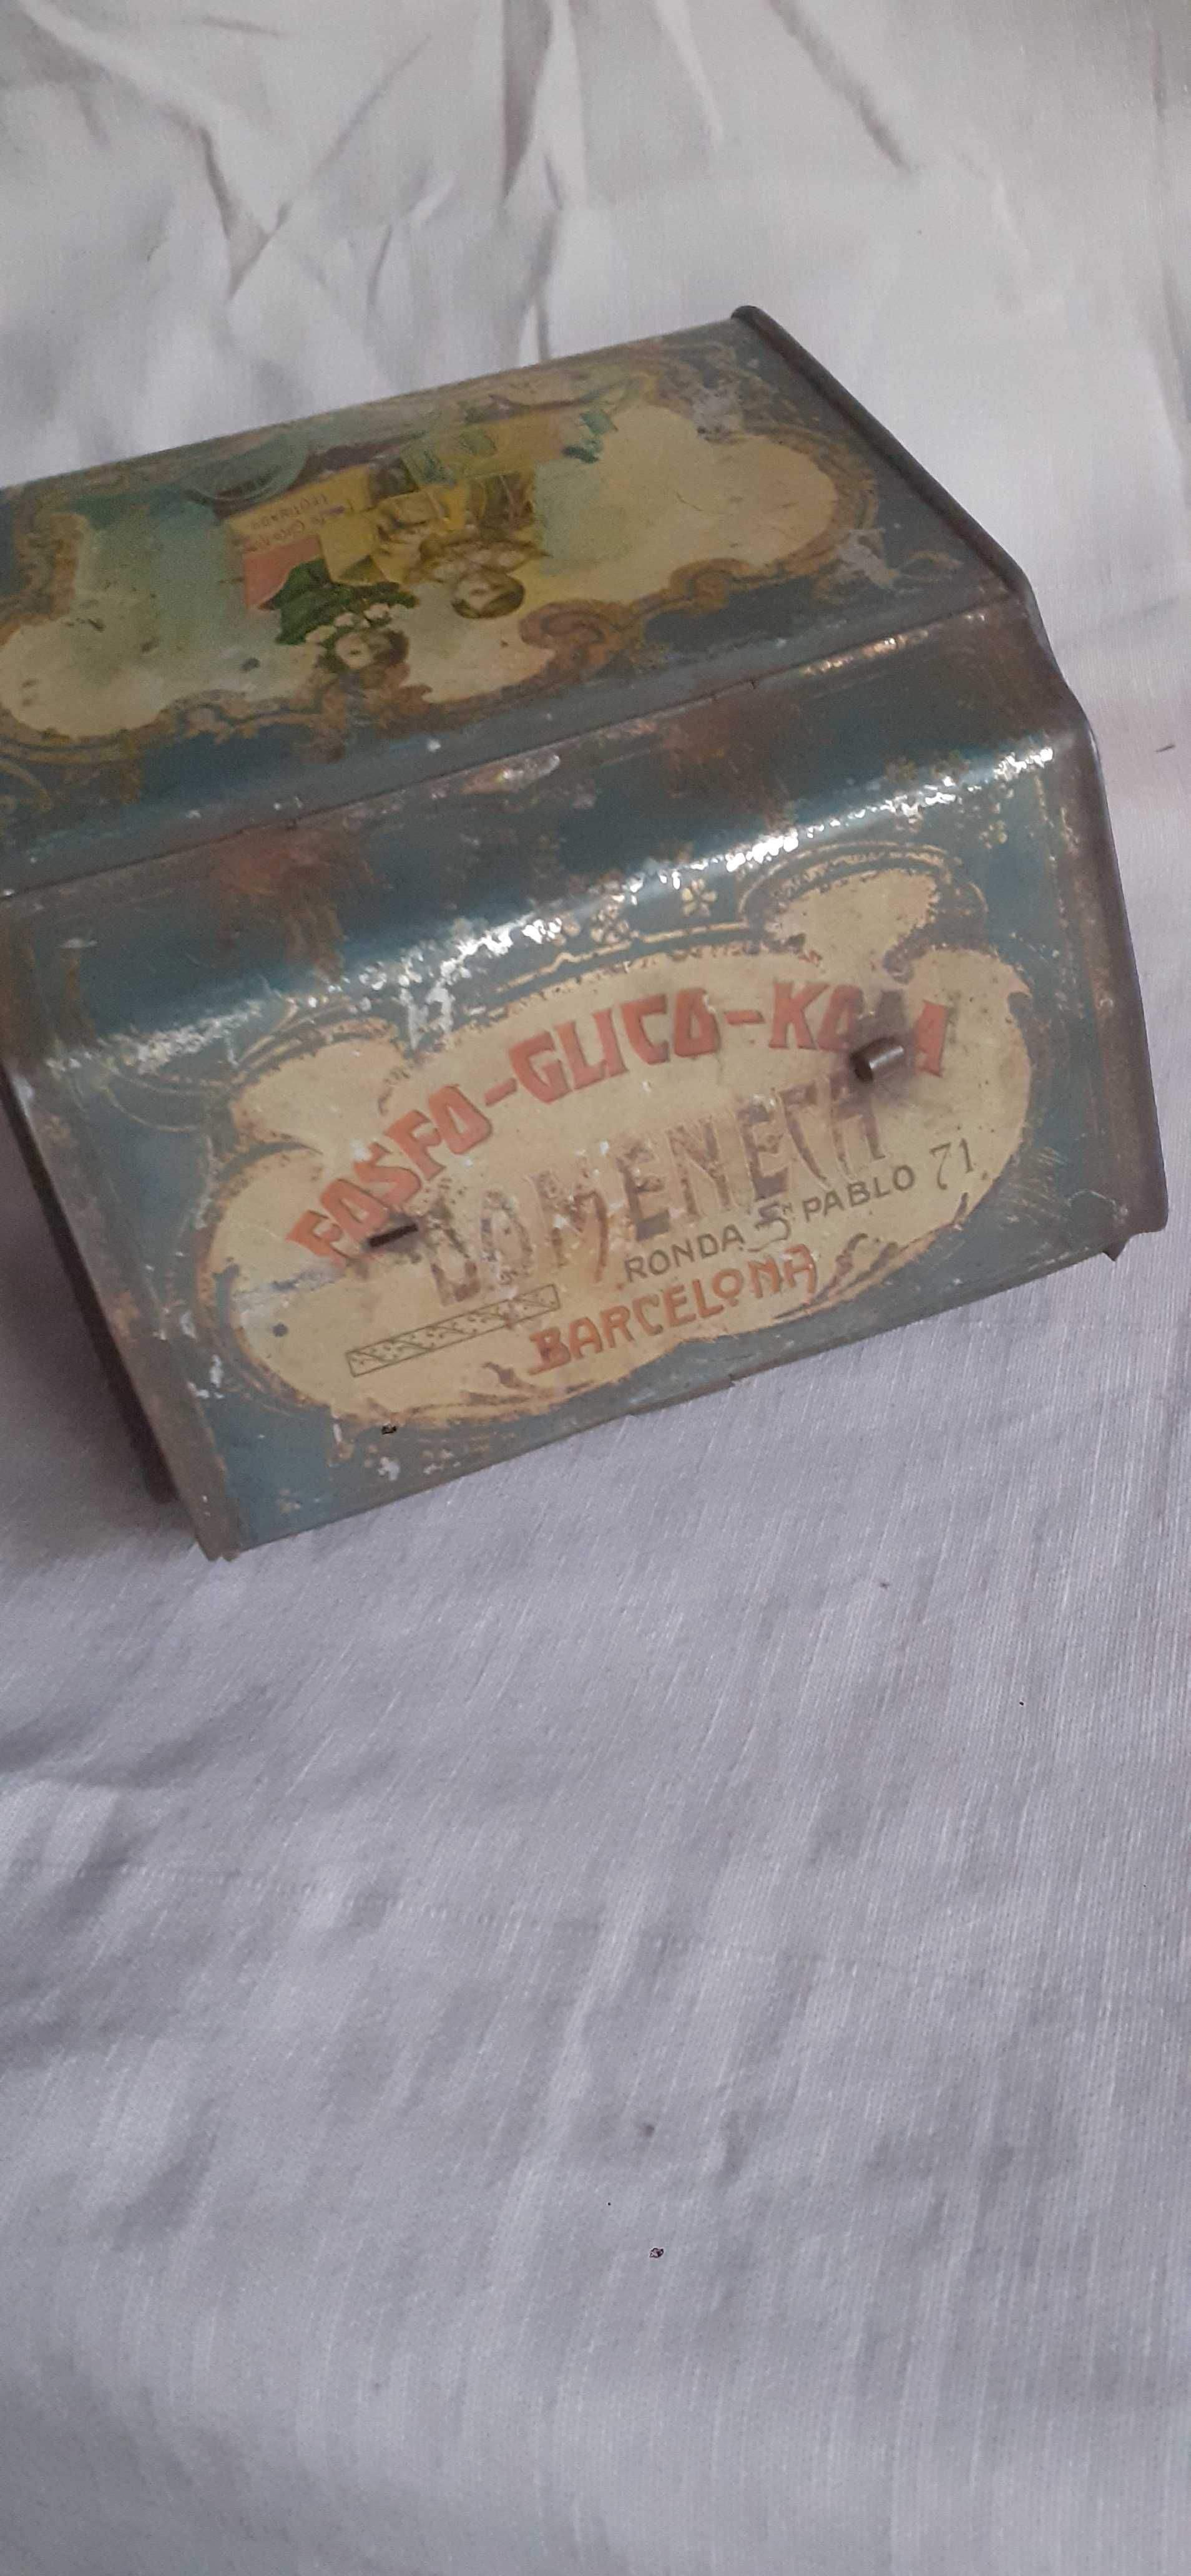 Stara puszka kuferek fosfo glico kola 1905 r.